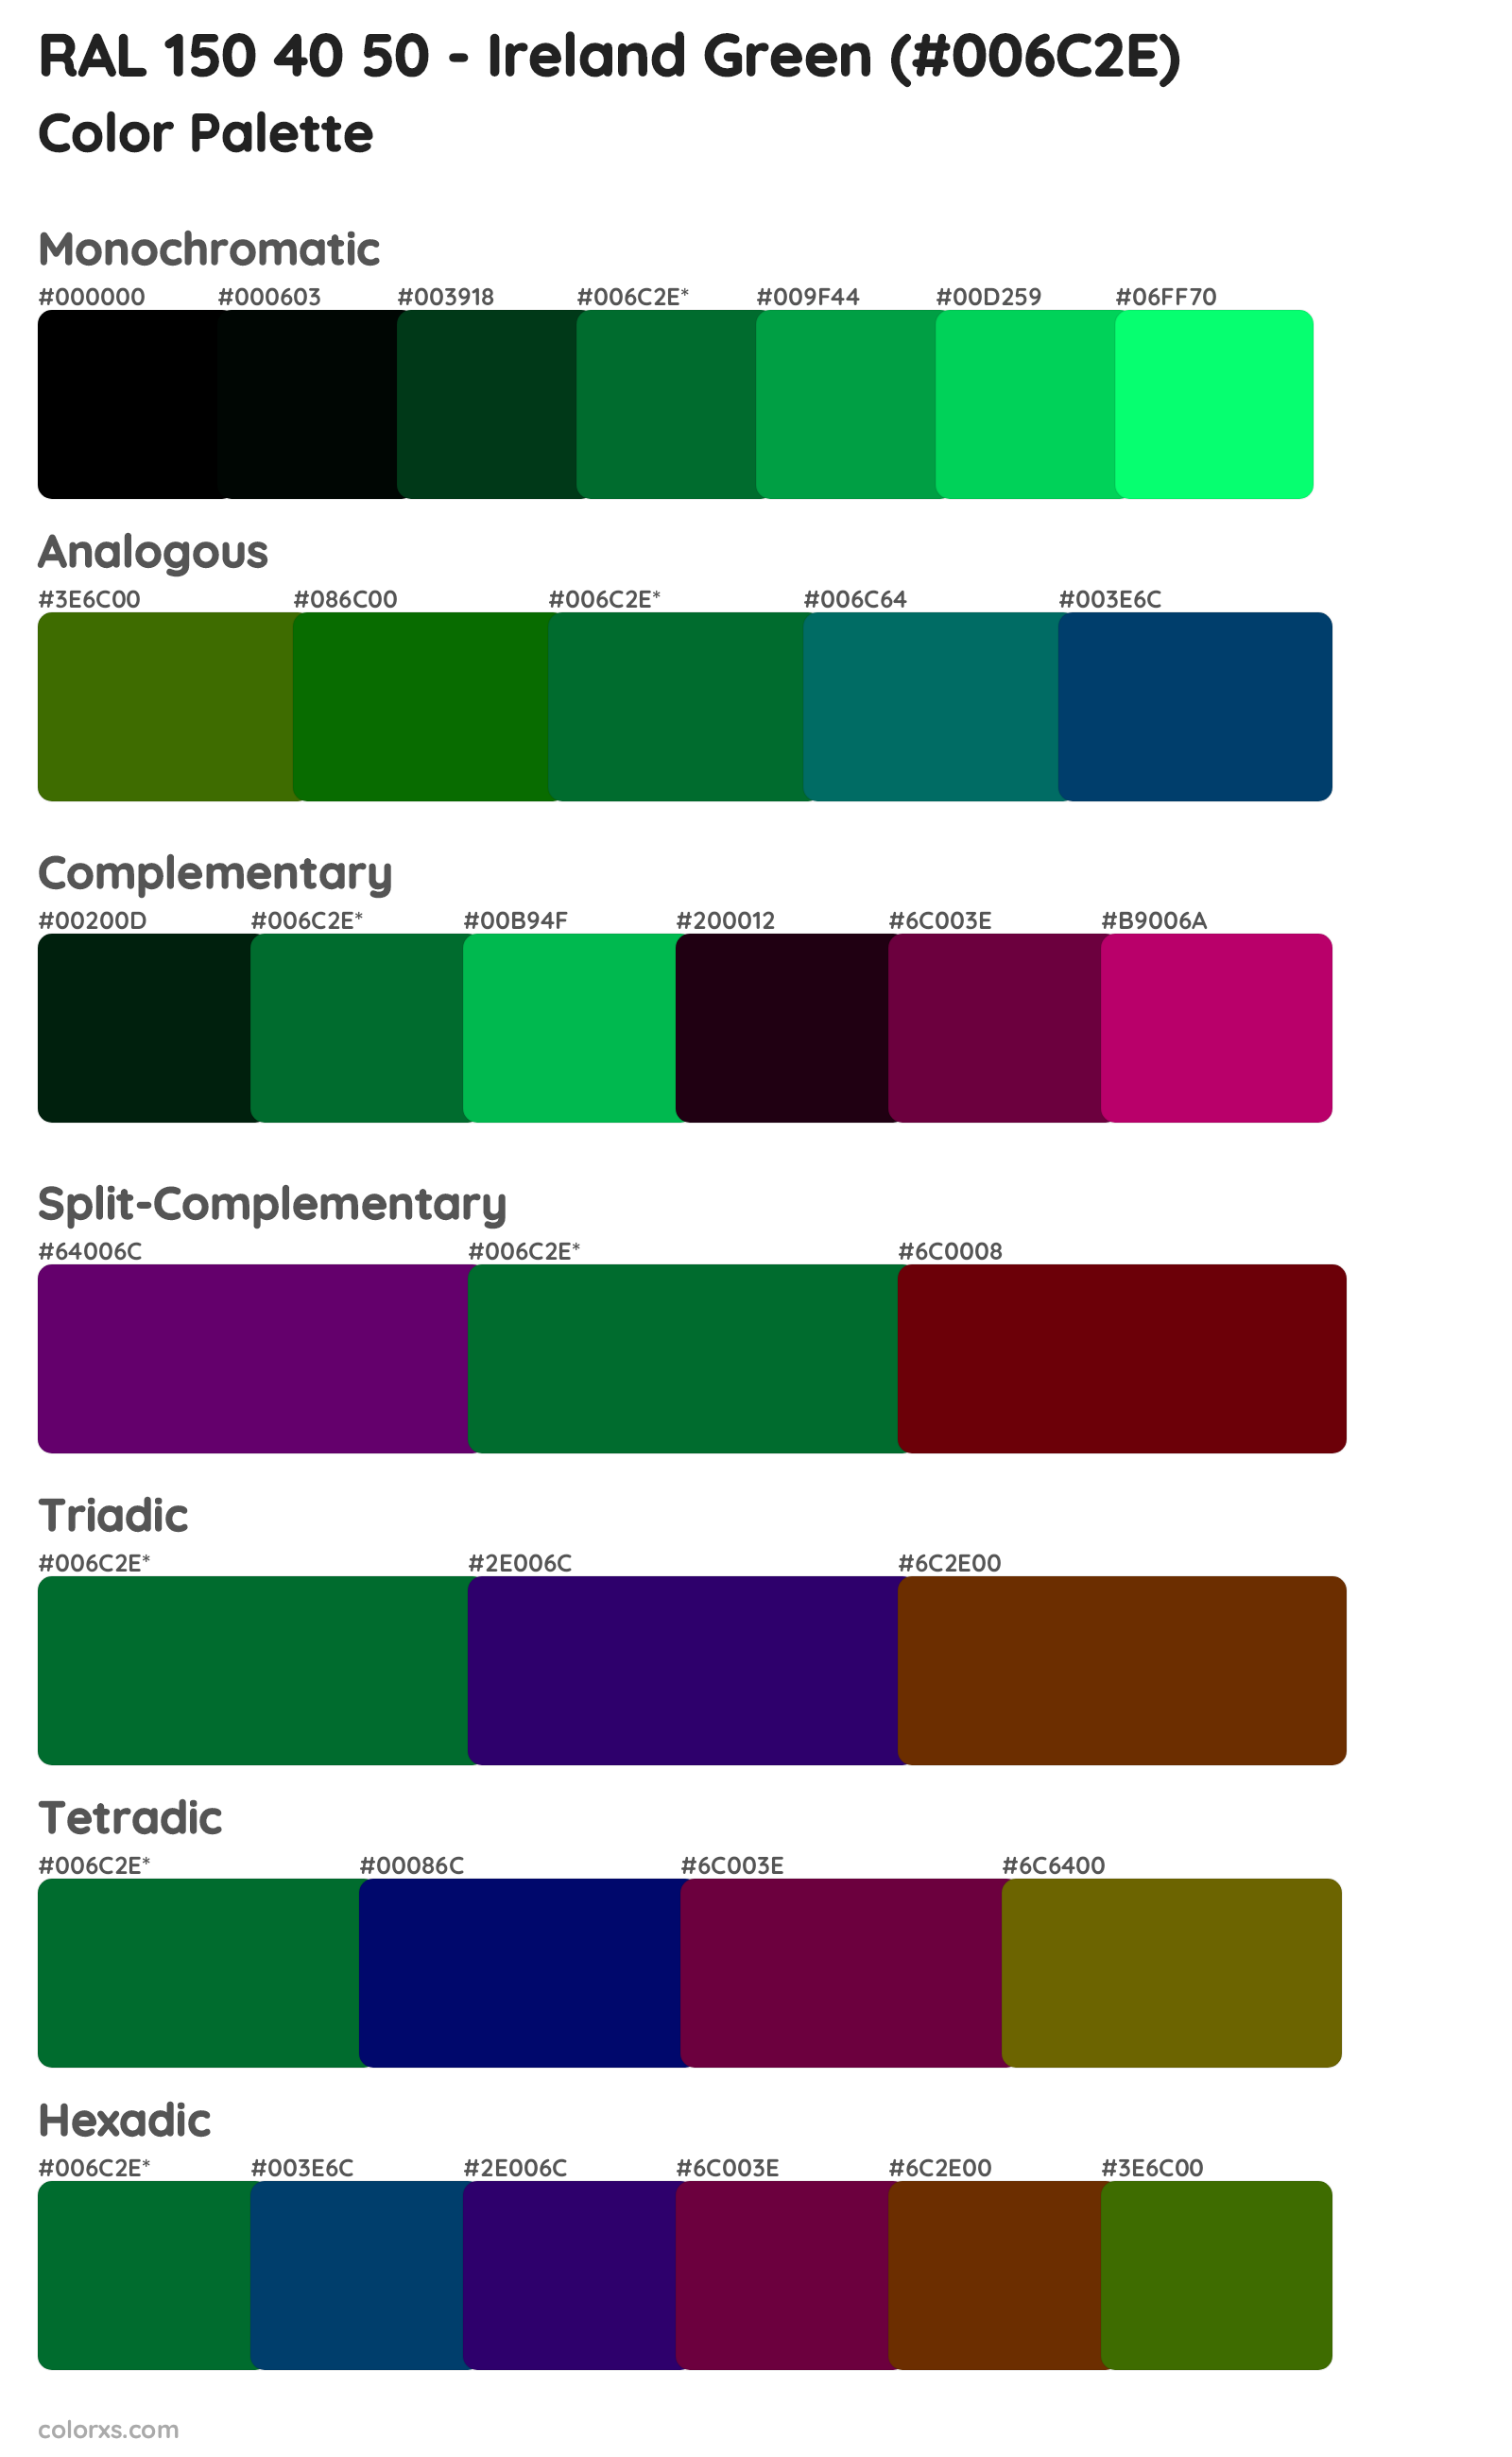 RAL 150 40 50 - Ireland Green Color Scheme Palettes